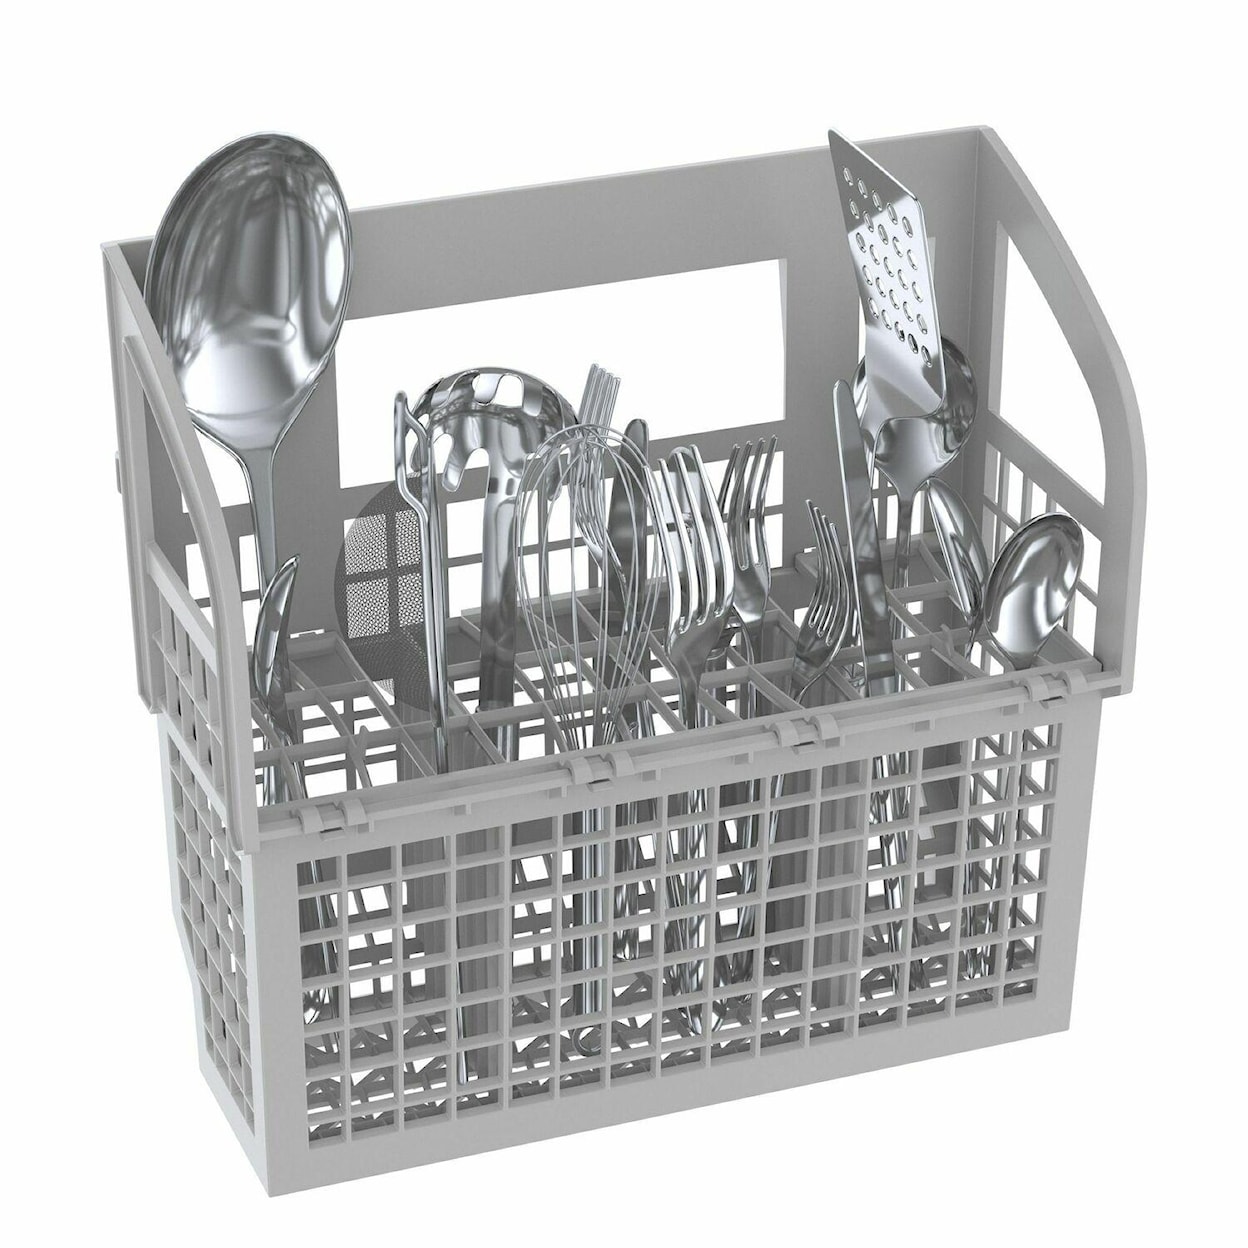 Bosch Dishwashers Built In Dishwasher